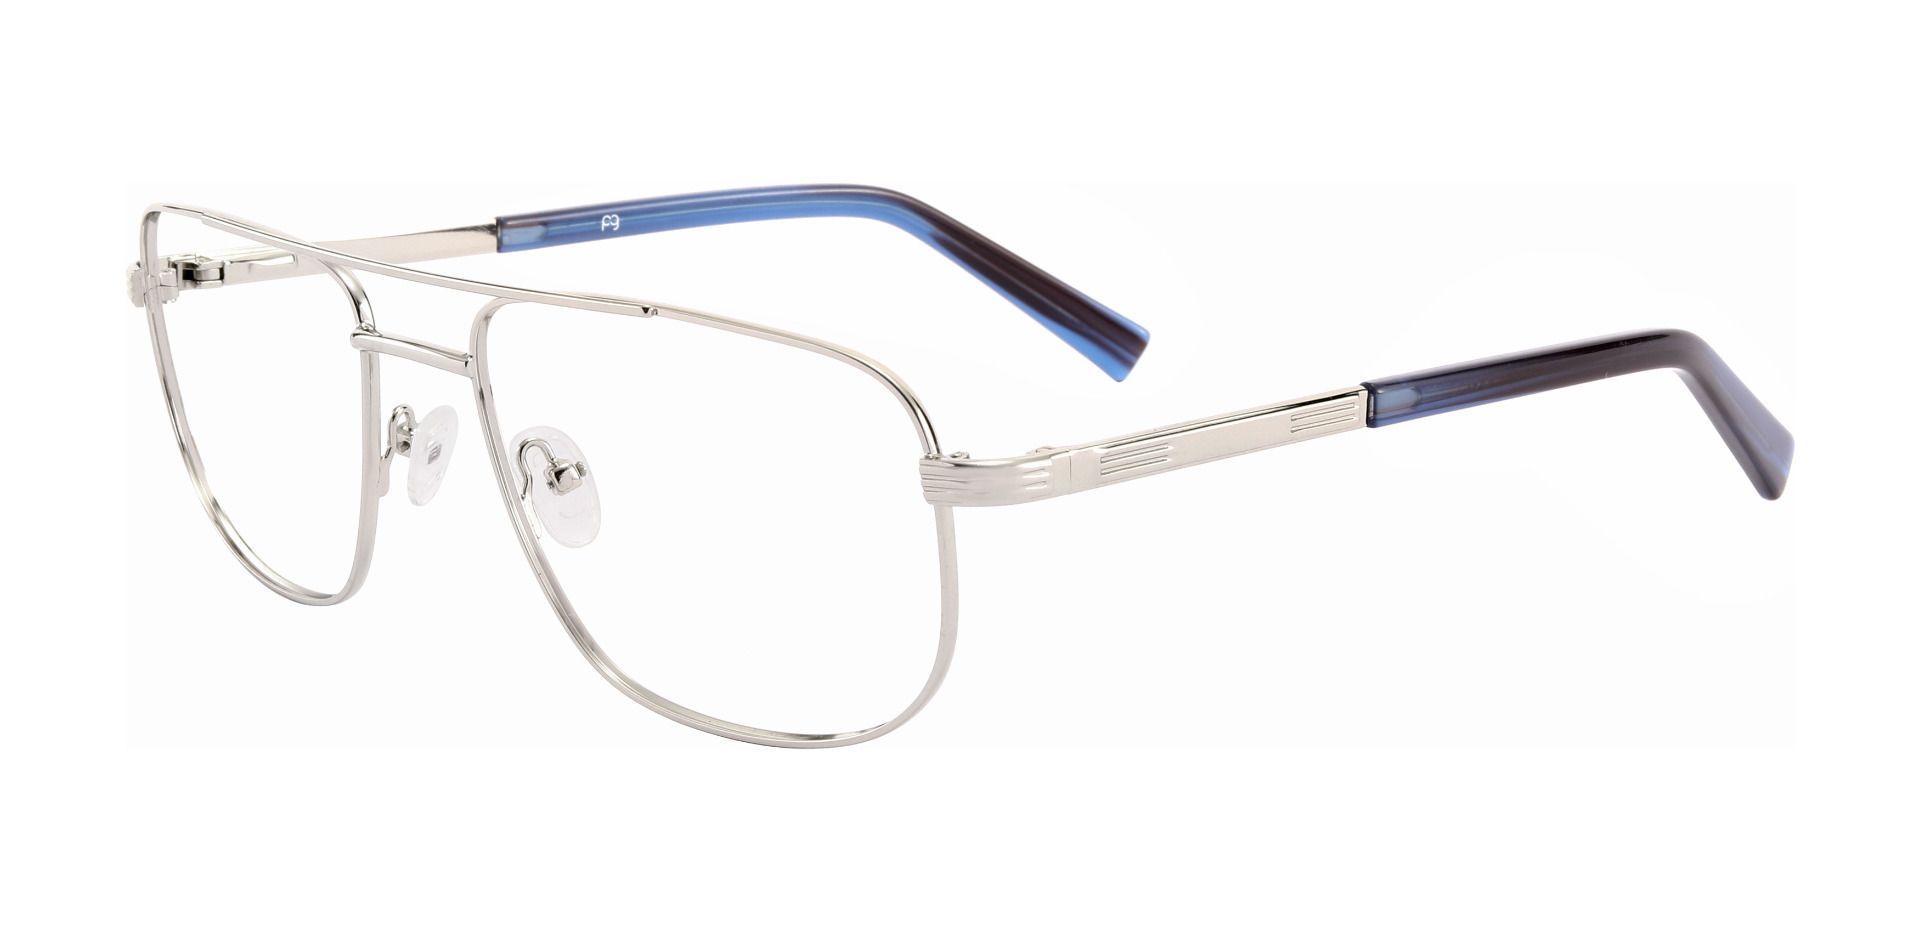 Drayton Aviator Eyeglasses Frame - Silver